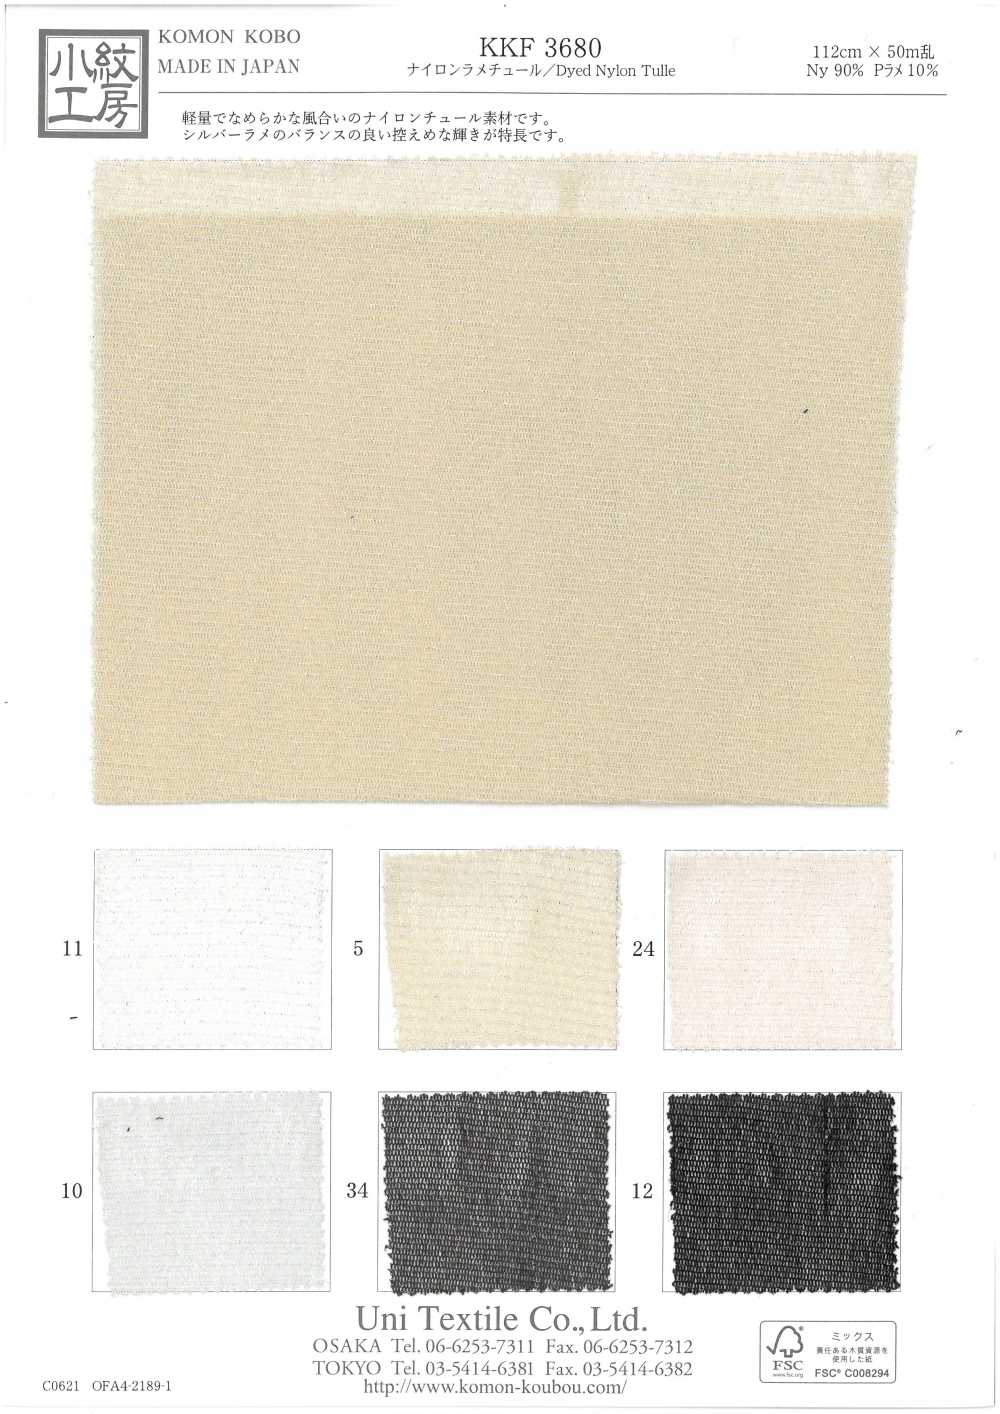 KKF3680 Nylon Lame Tüll[Textilgewebe] Uni Textile